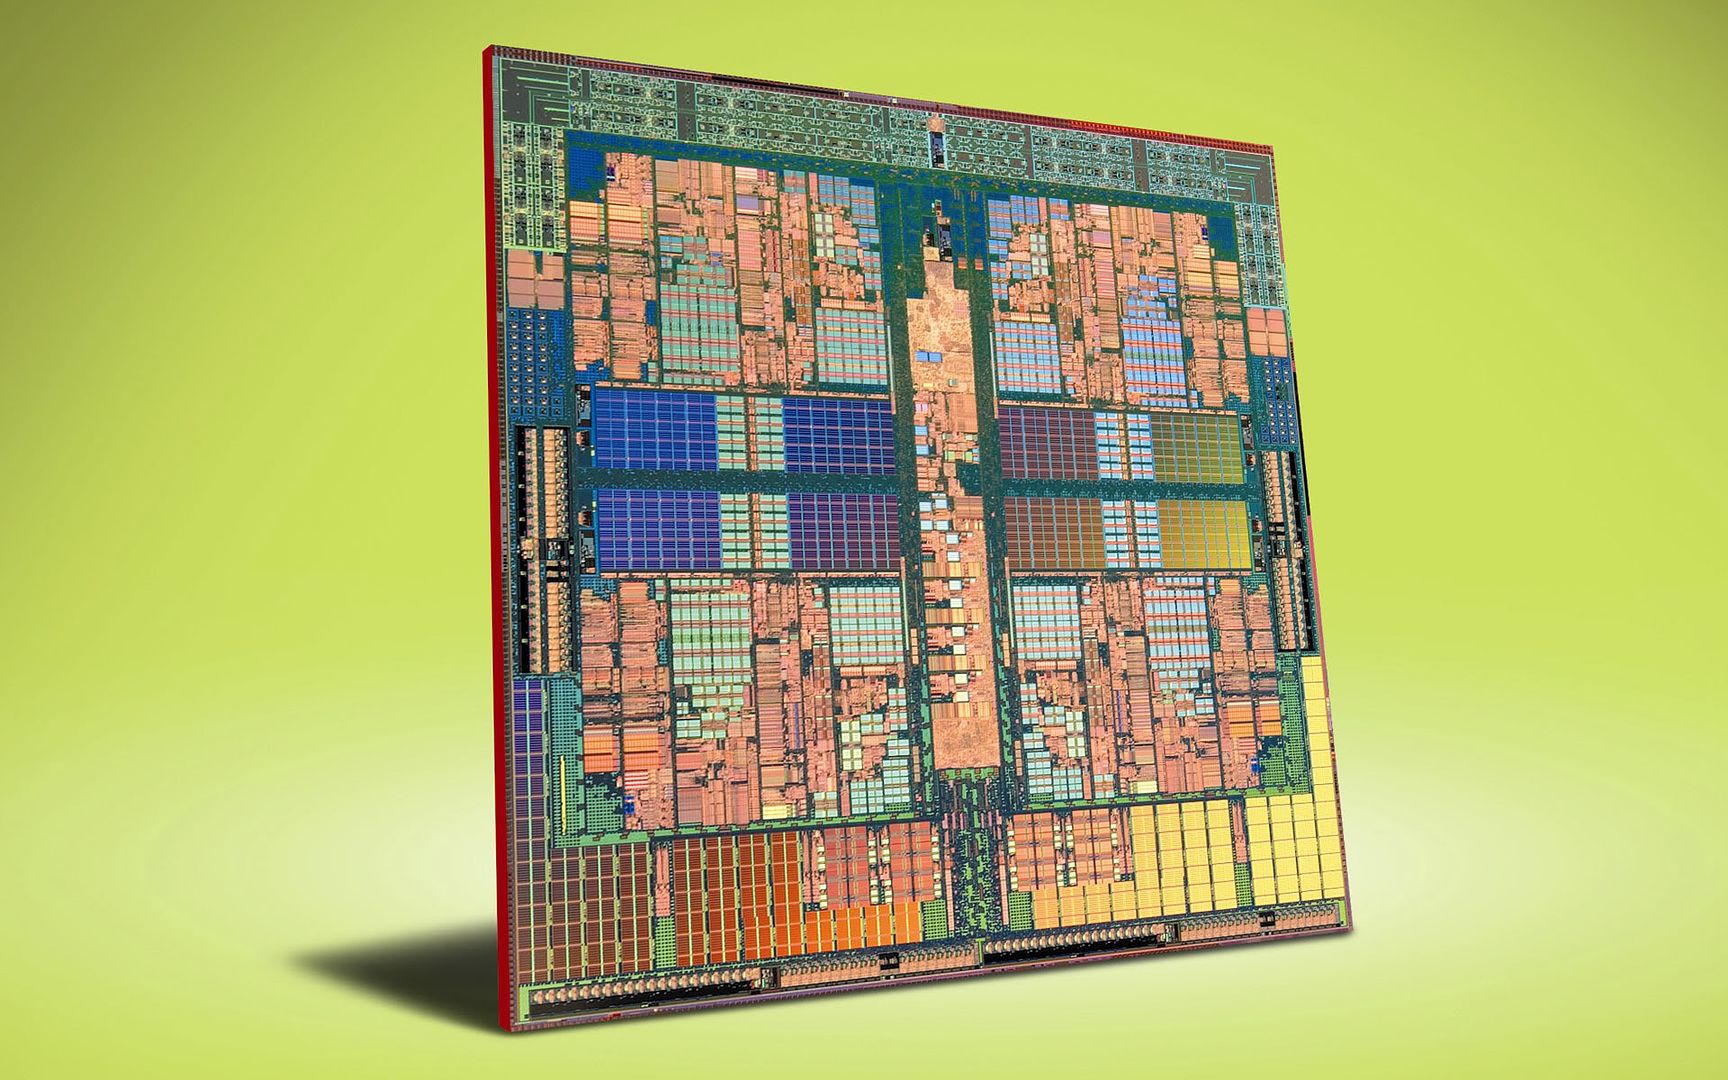 AMD wallpaper pack - Phenom I + II - Tech Jamaica - Jamaica's Technology 